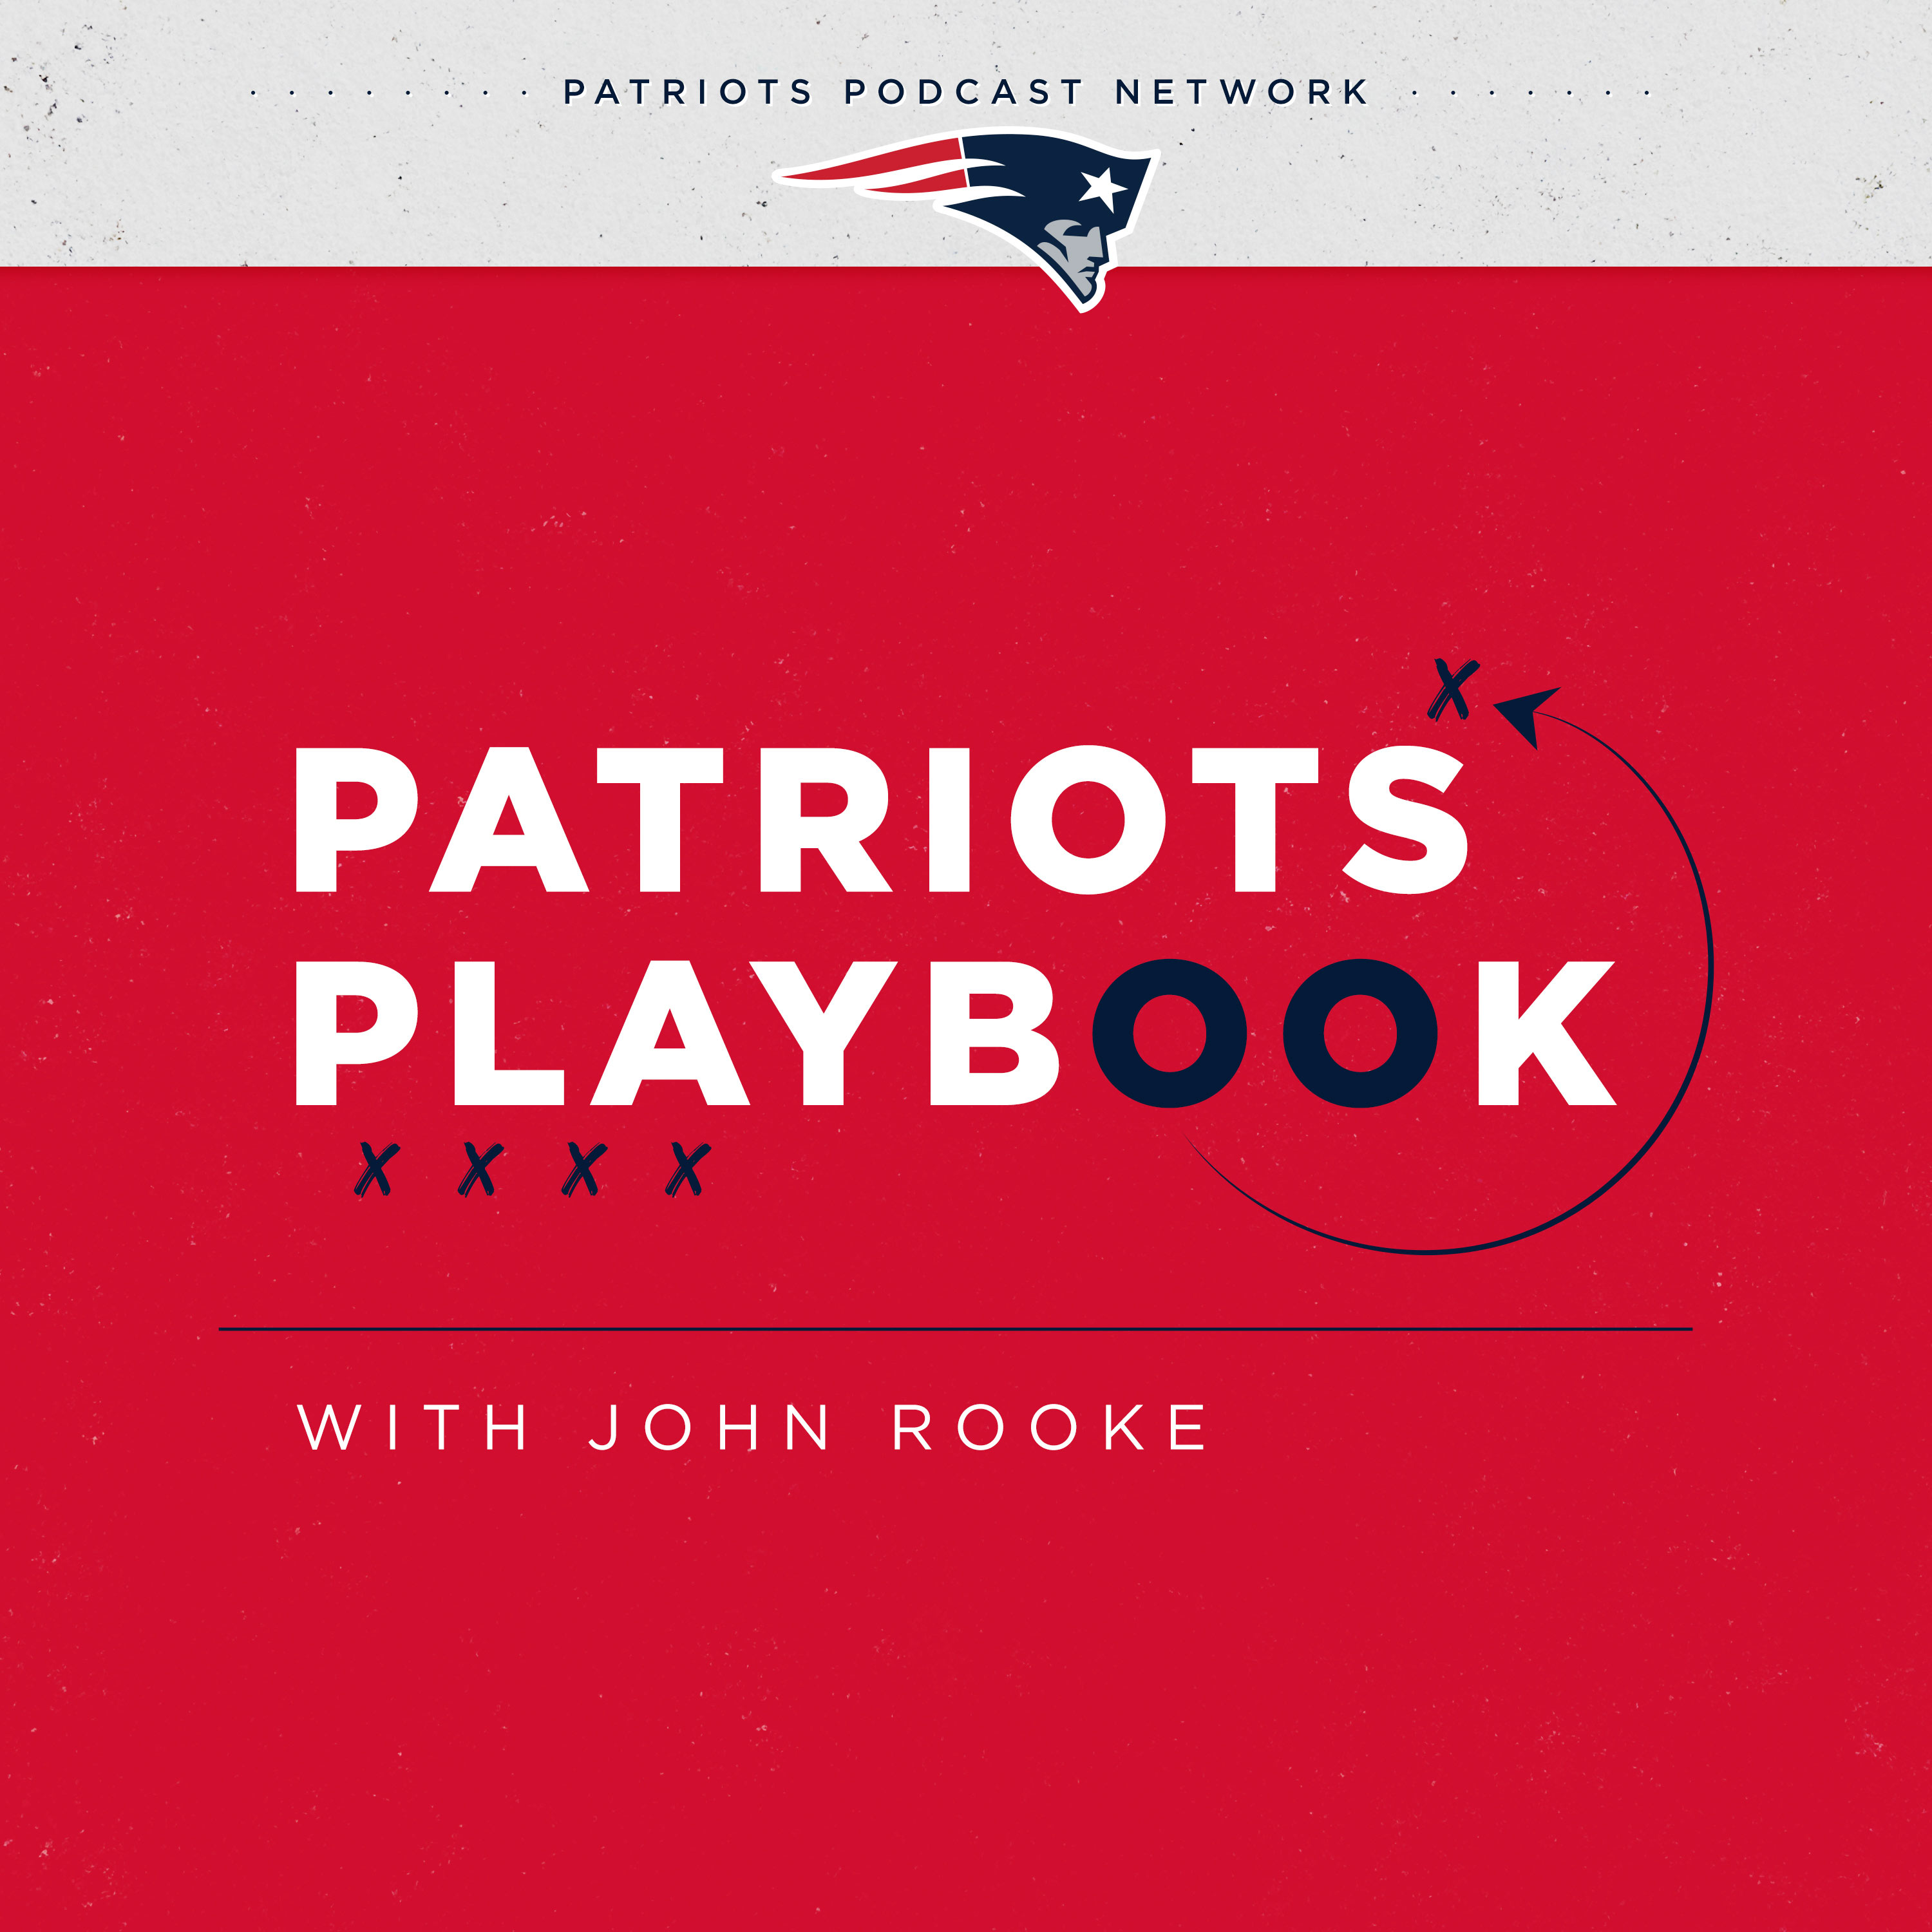 Patriots Playbook 11/22: Previewing Pats - Vikings on Thanksgiving, NFL Week 12 Predictions